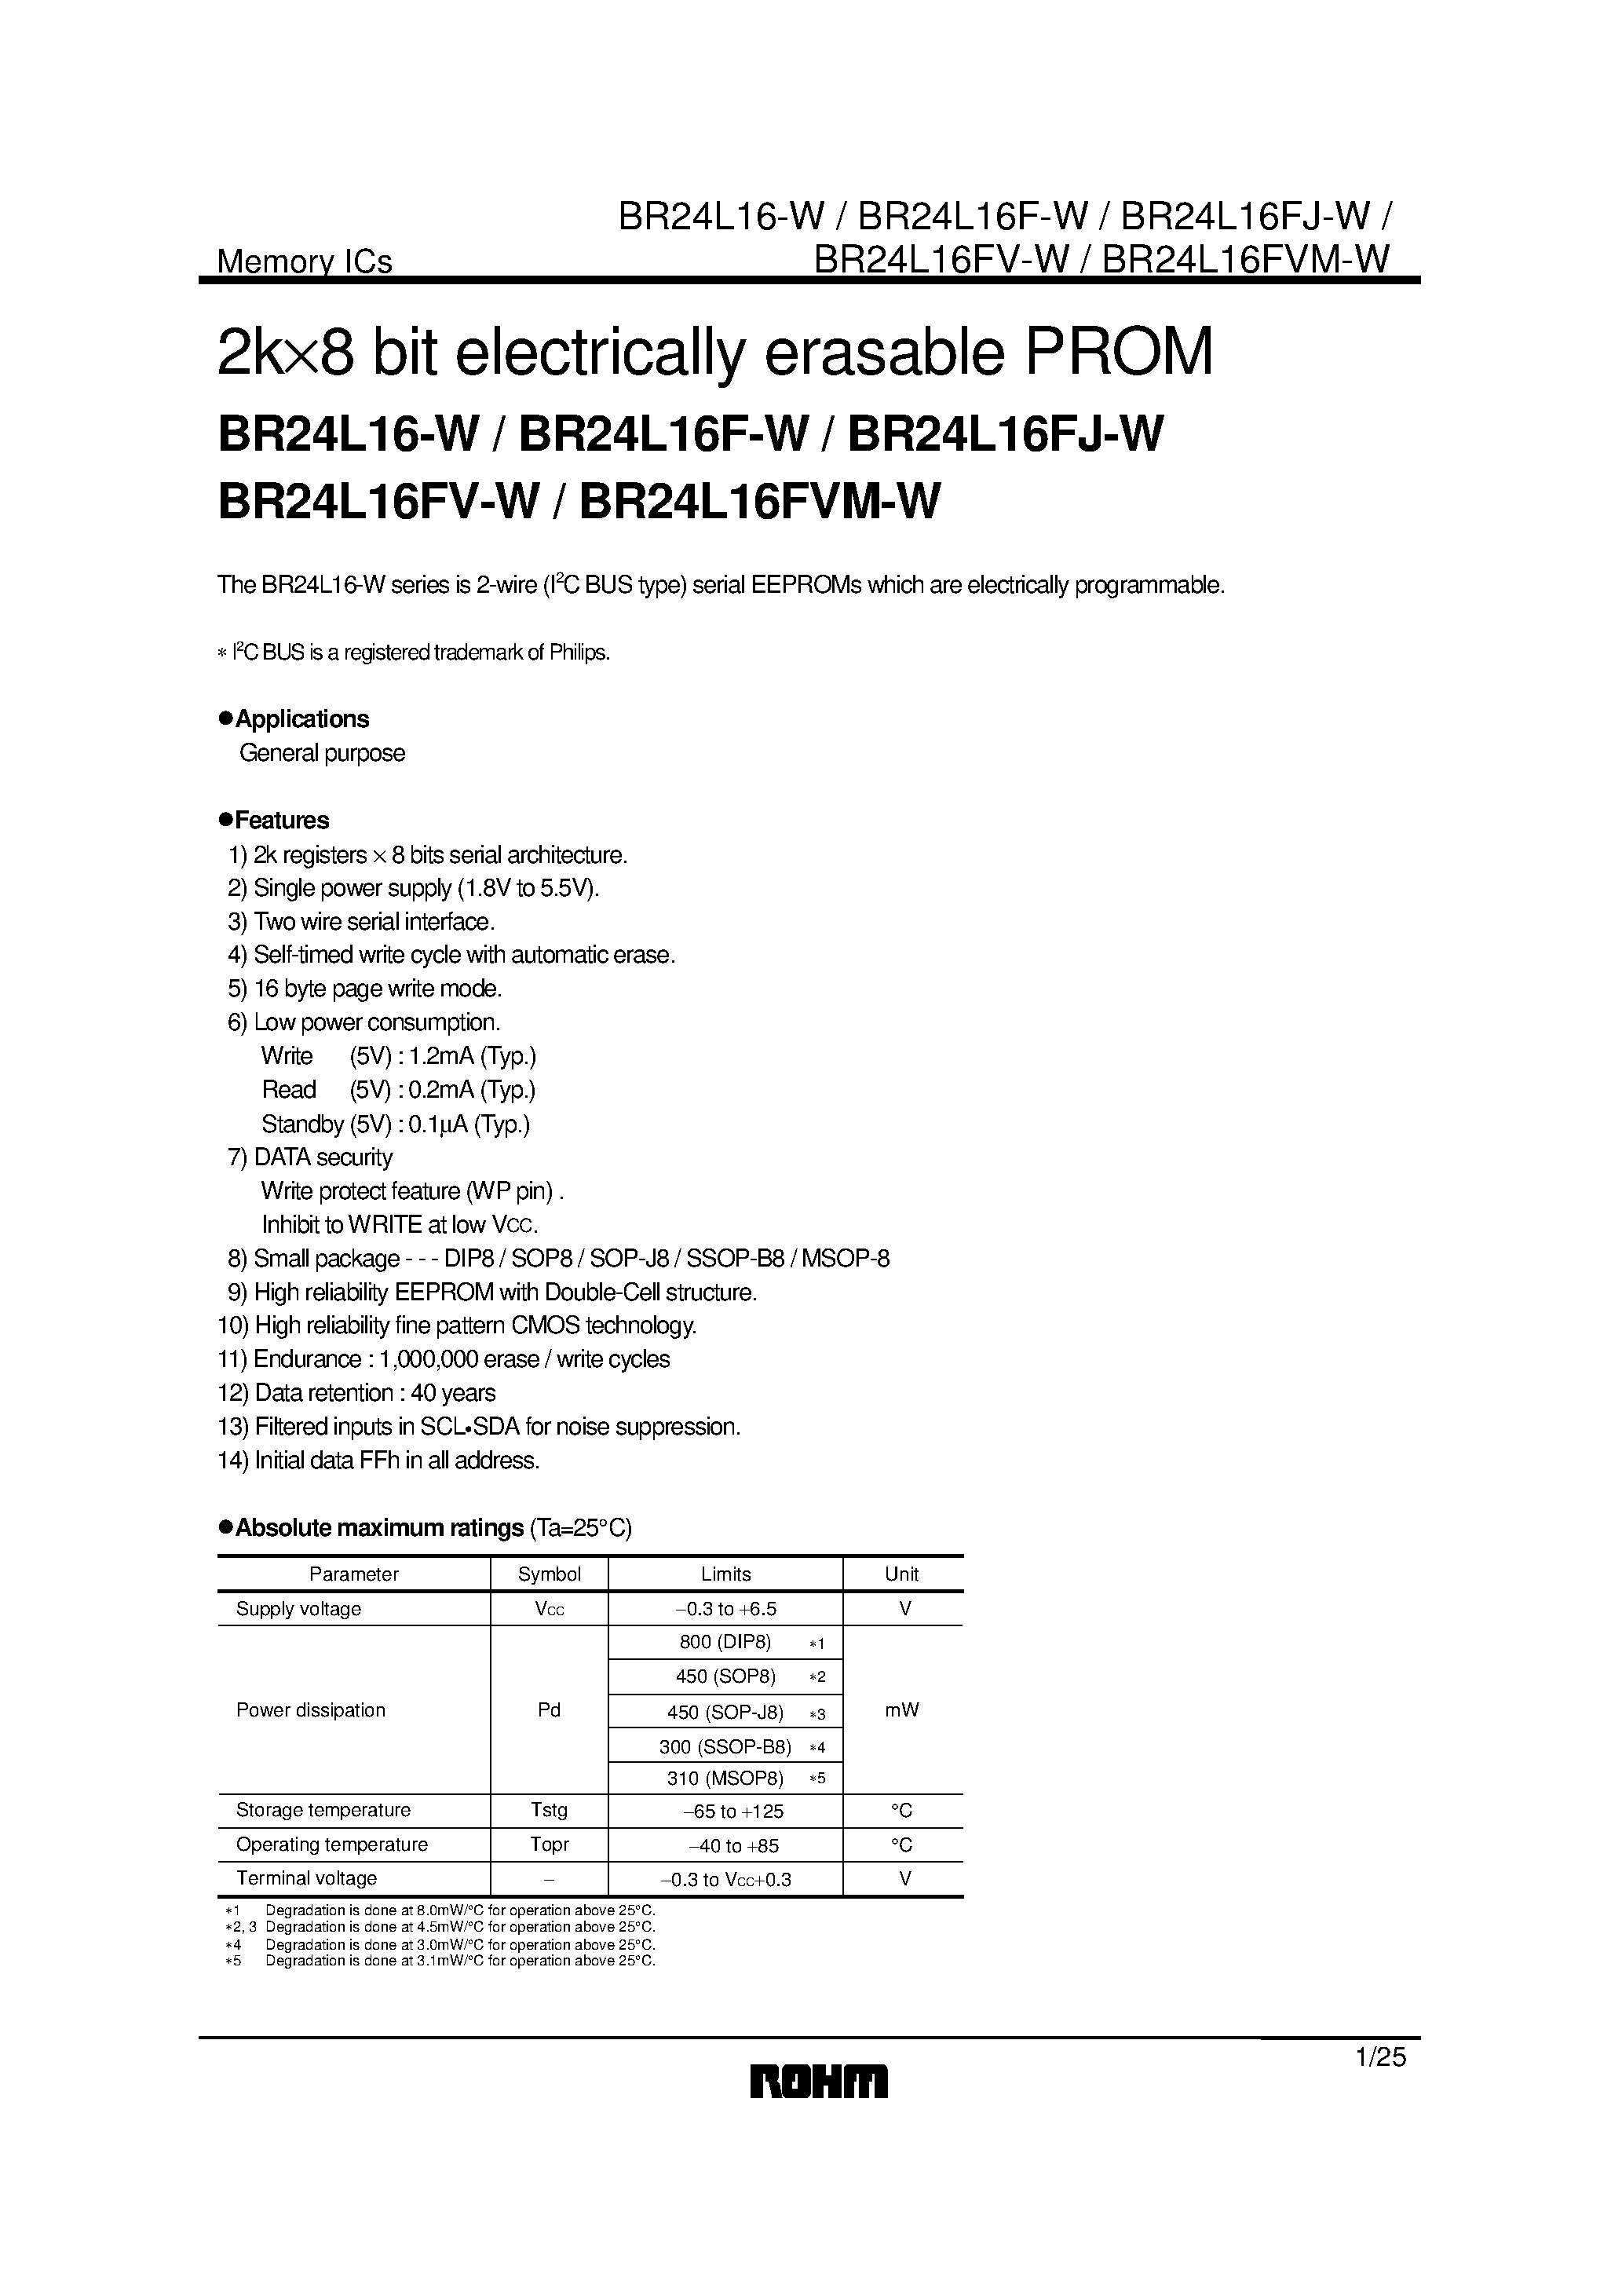 Datasheet BR24L16F-W - 2k8 bit electrically erasable PROM page 1